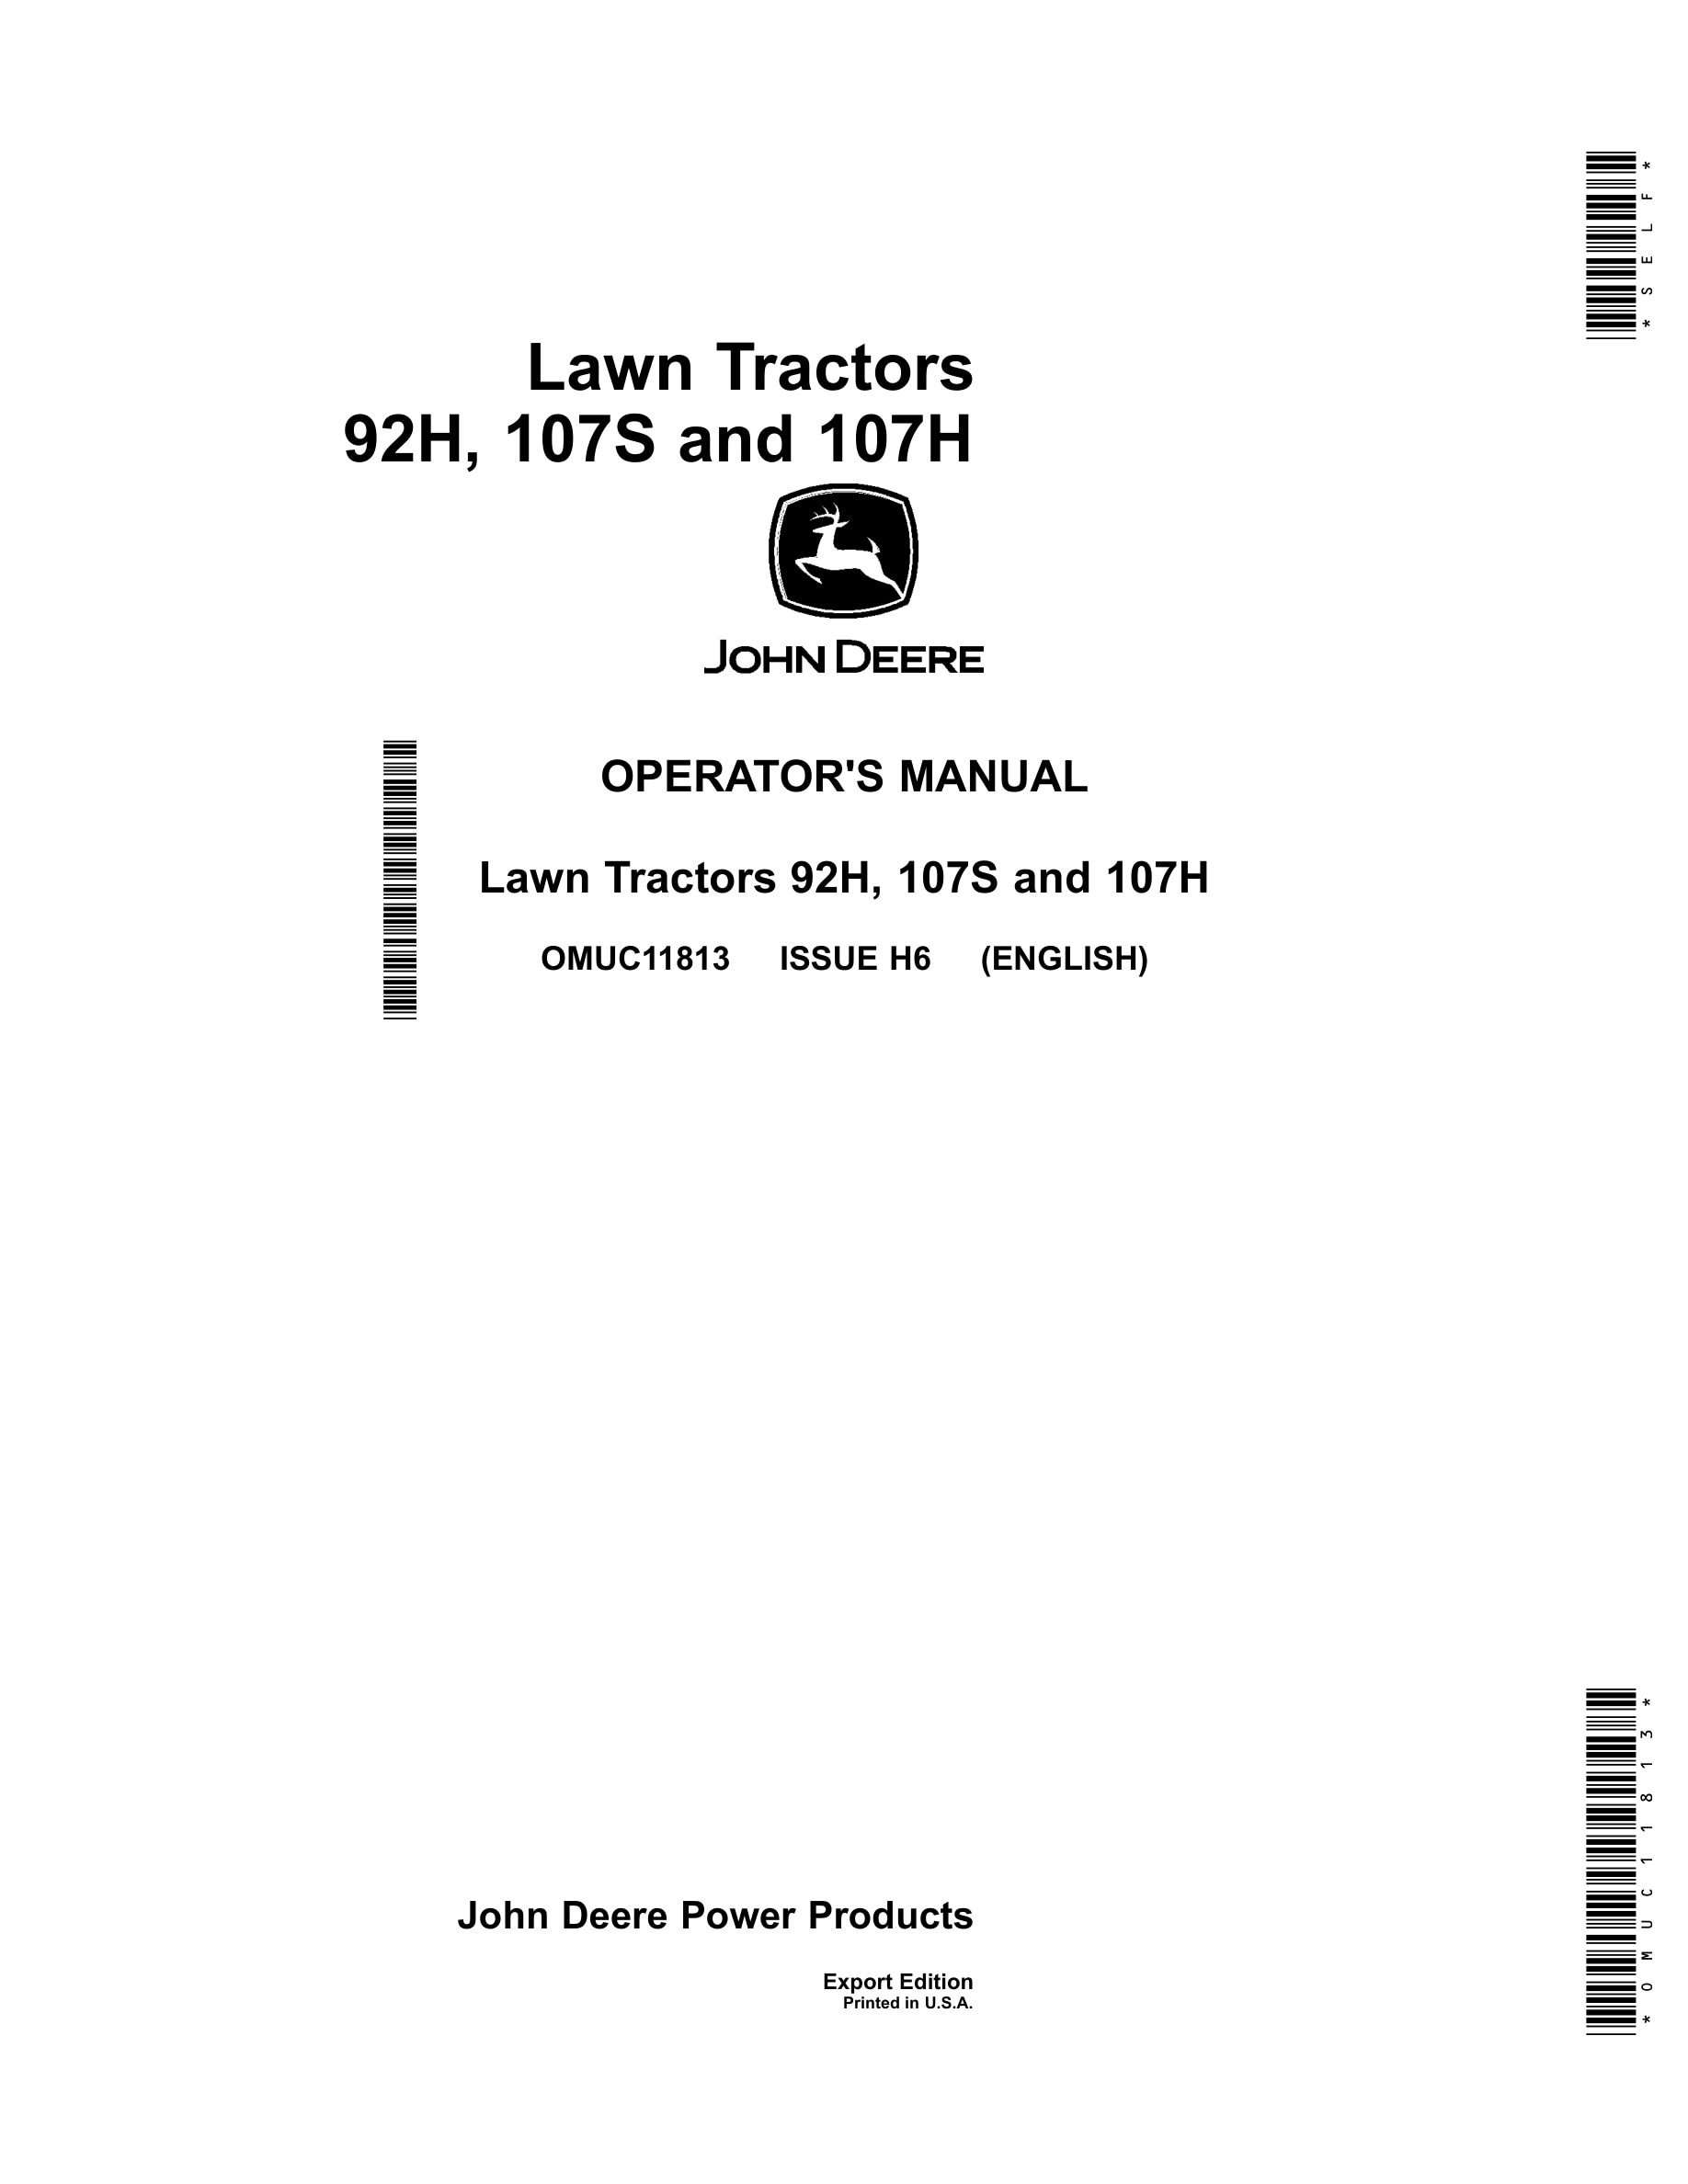 John Deere 92h, 107s And 107h Lawn Tractors Operator Manuals OMUC11813-1